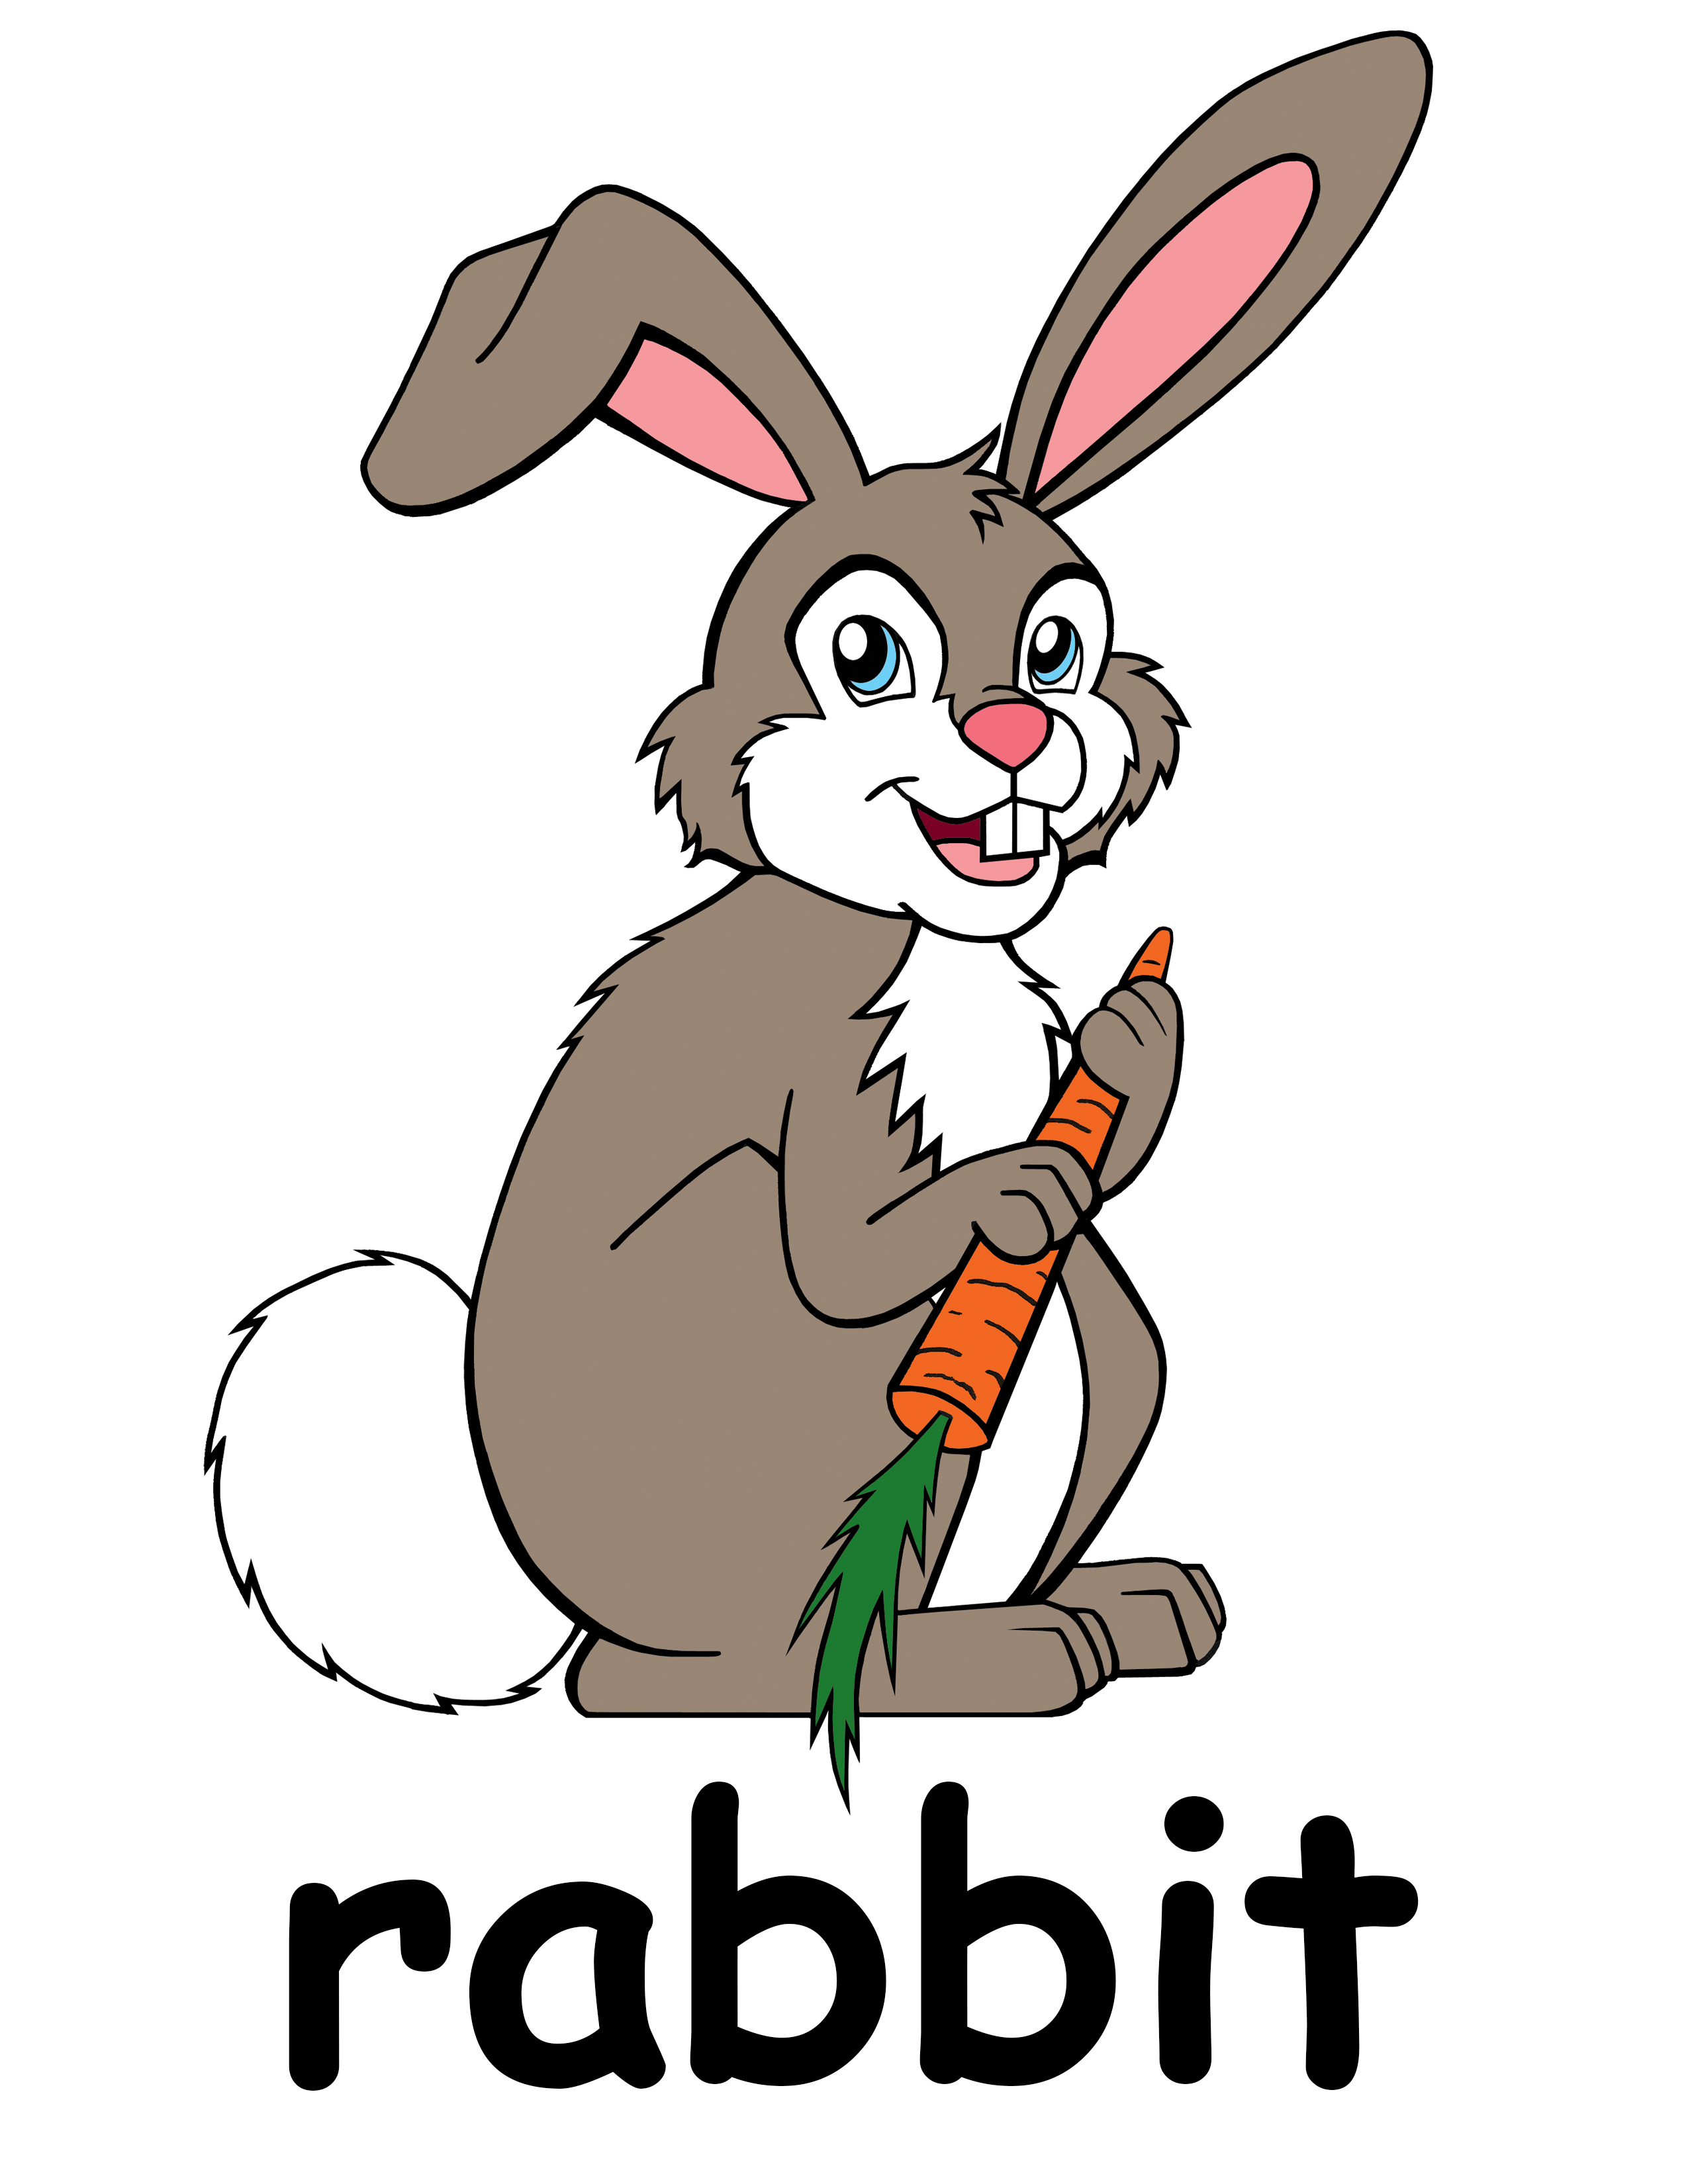 Bunny rabbit cartoon pictures clipart